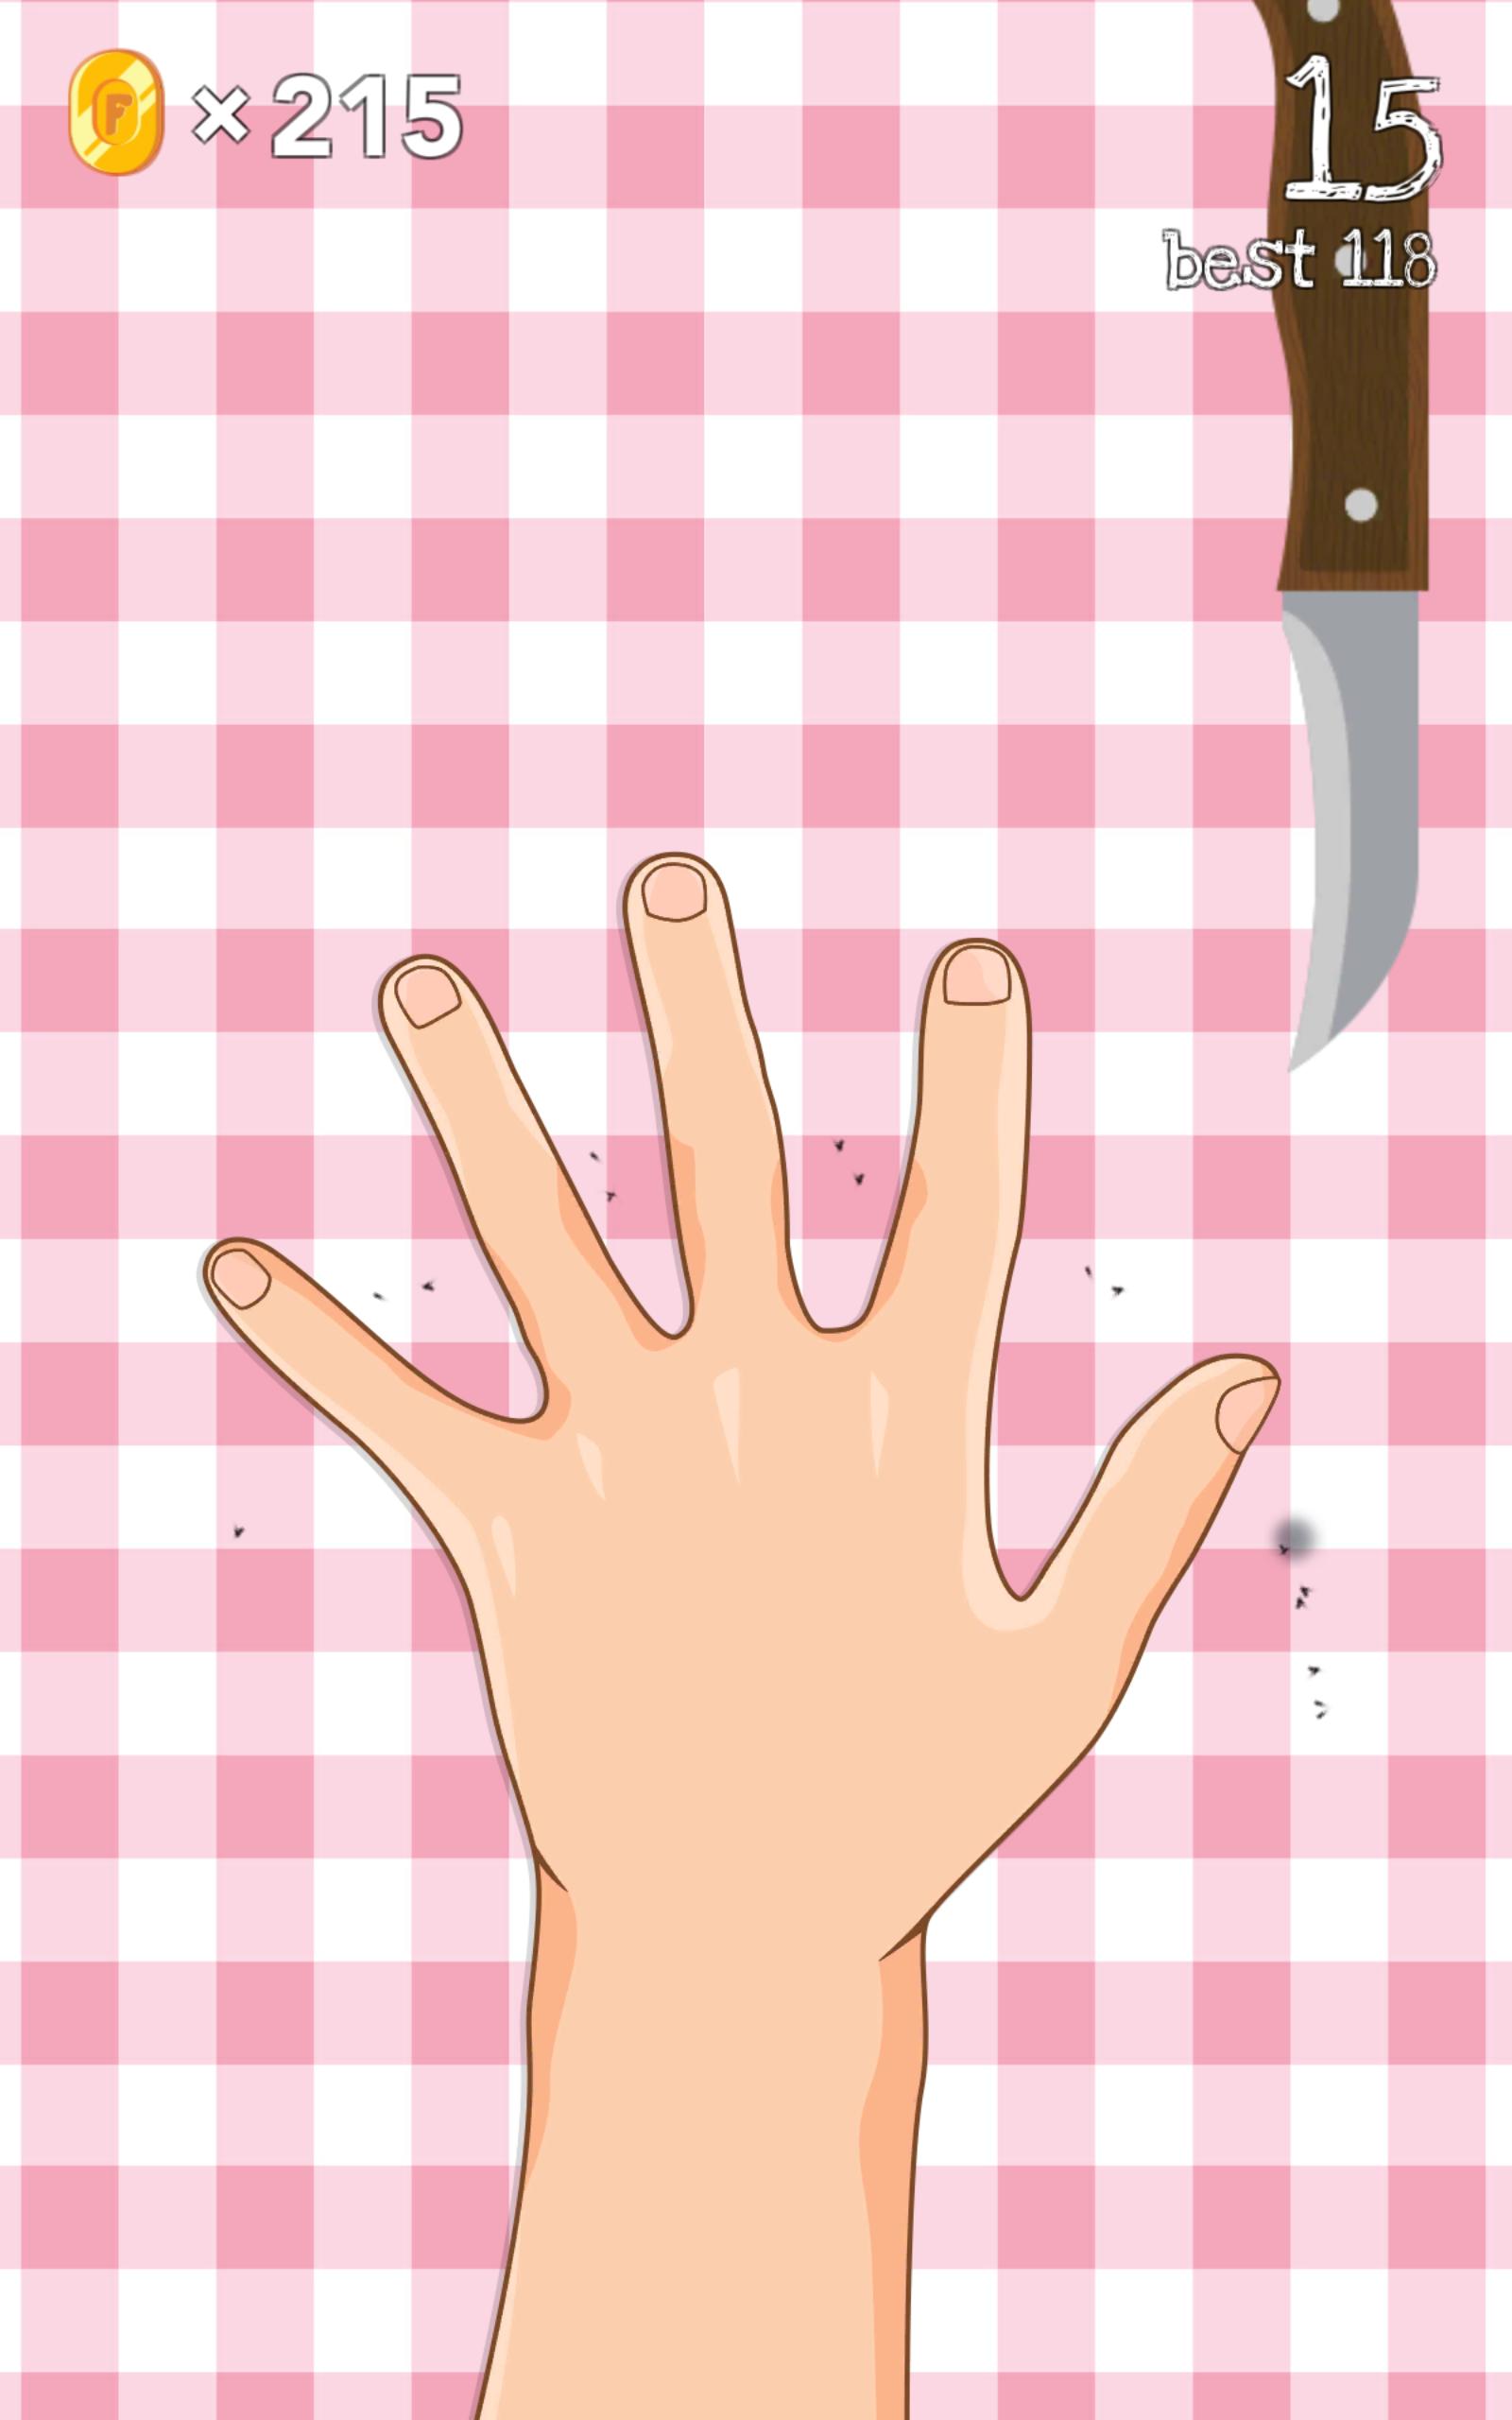 4 Fingers - free knife games 3.4 Screenshot 8